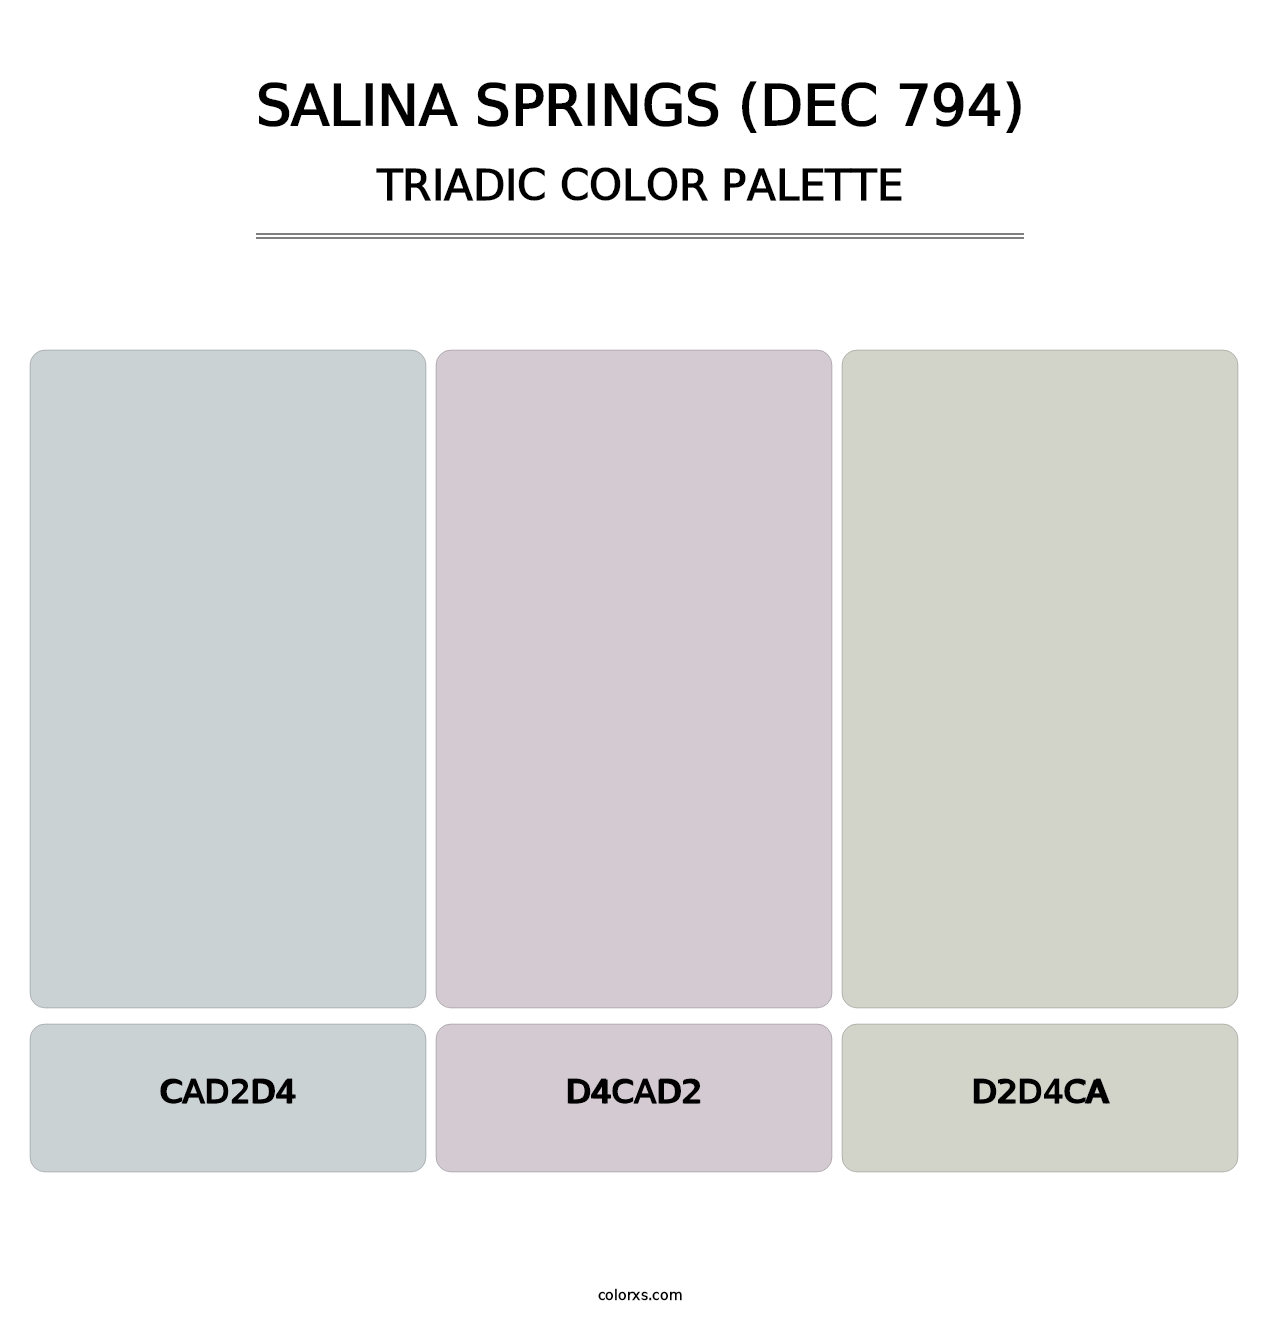 Salina Springs (DEC 794) - Triadic Color Palette